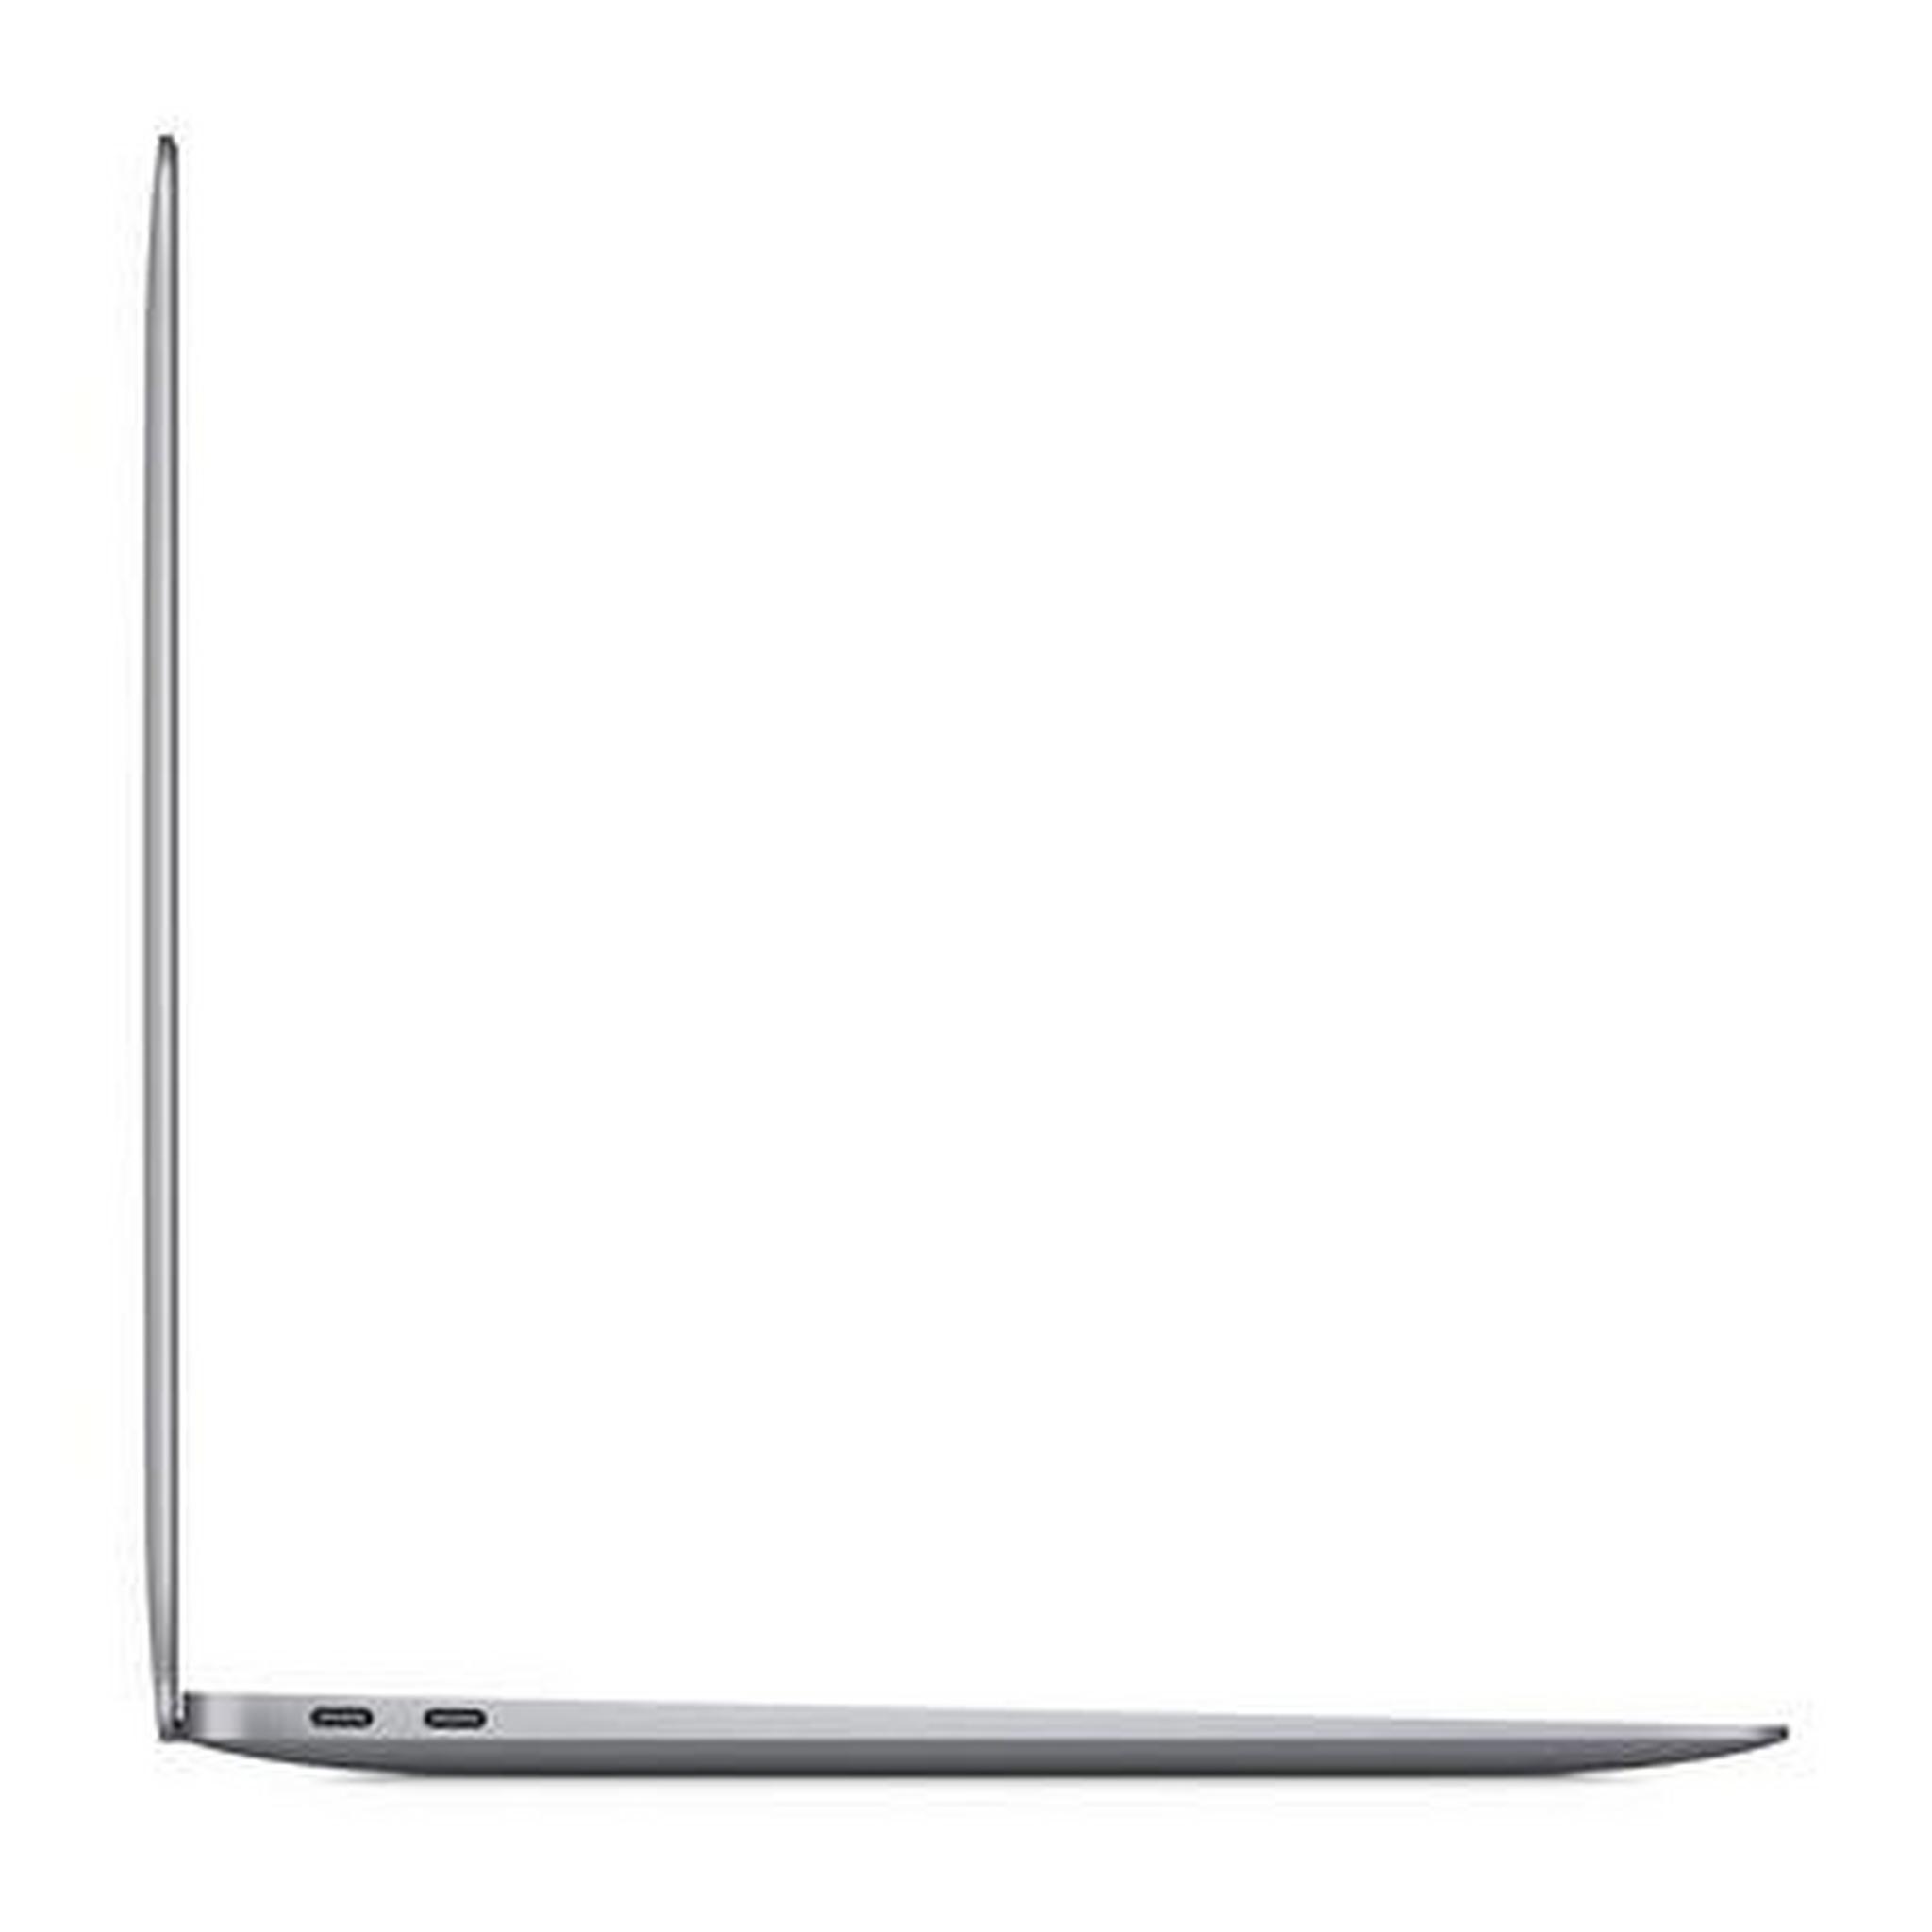 Apple MacBook Air M1, RAM 8GB 512GB SSD 13.3inch (2020) Space Grey